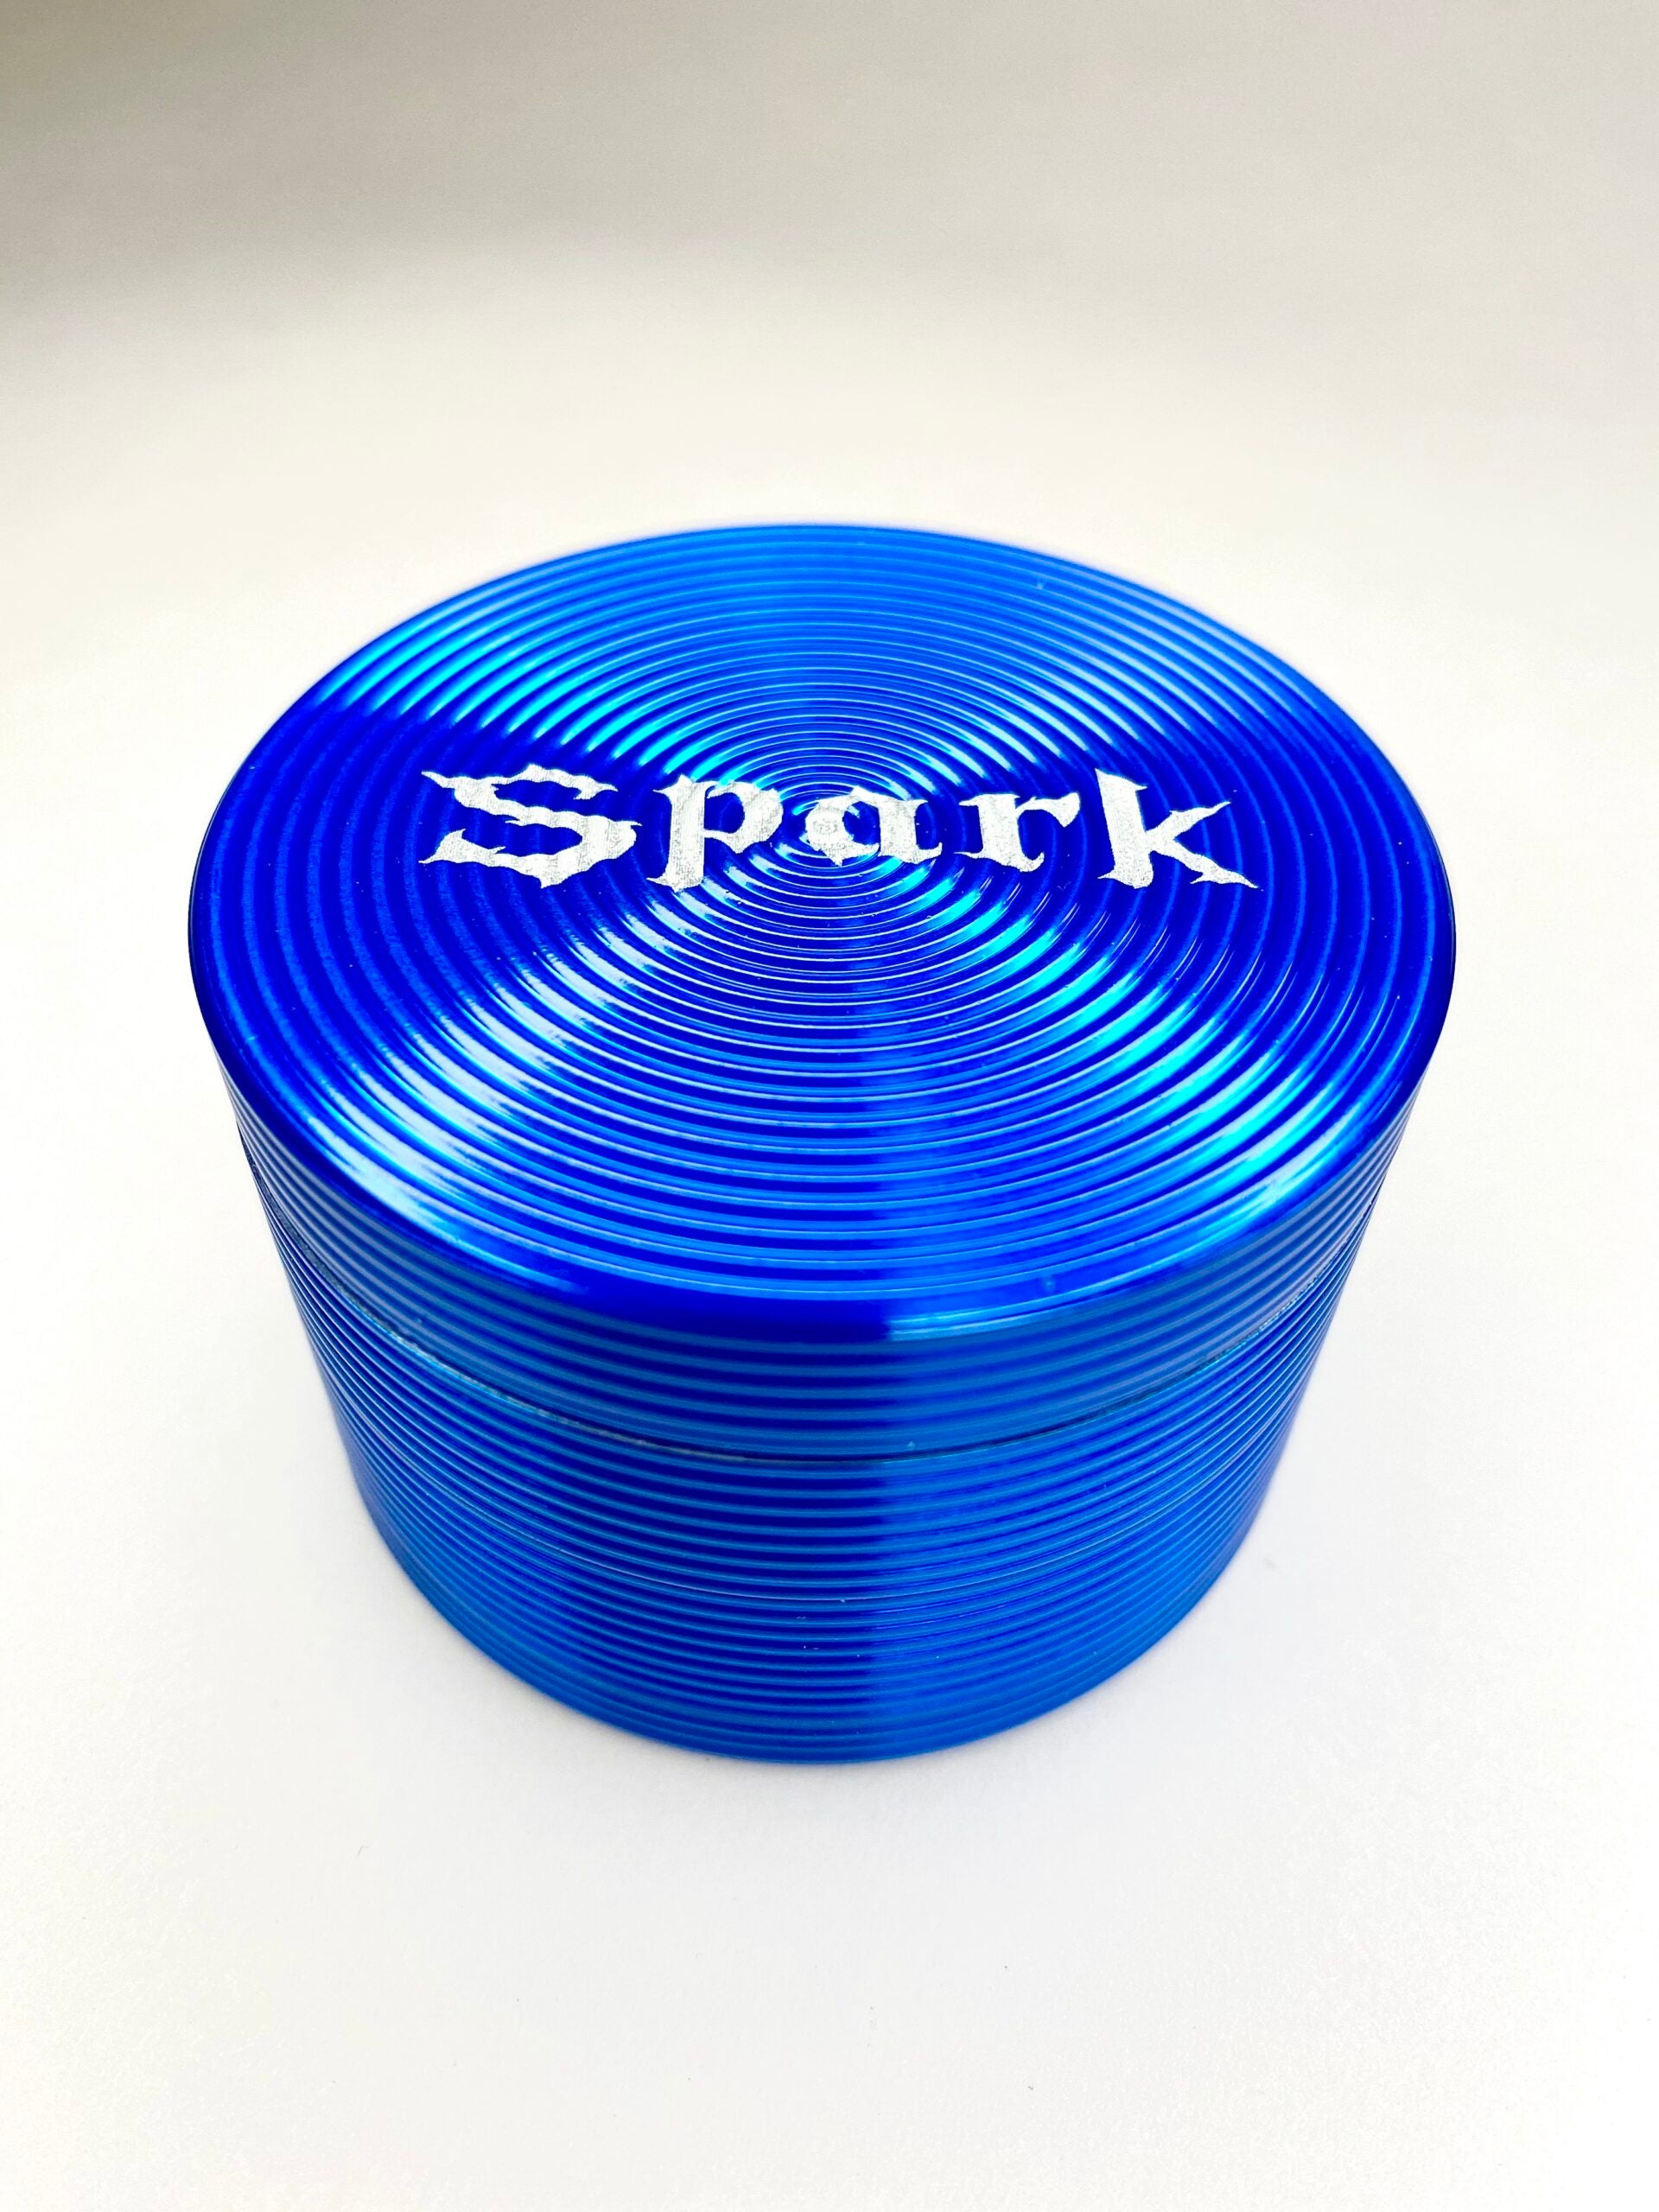 SPARK Grinder - Spiral Design - 4 Piece